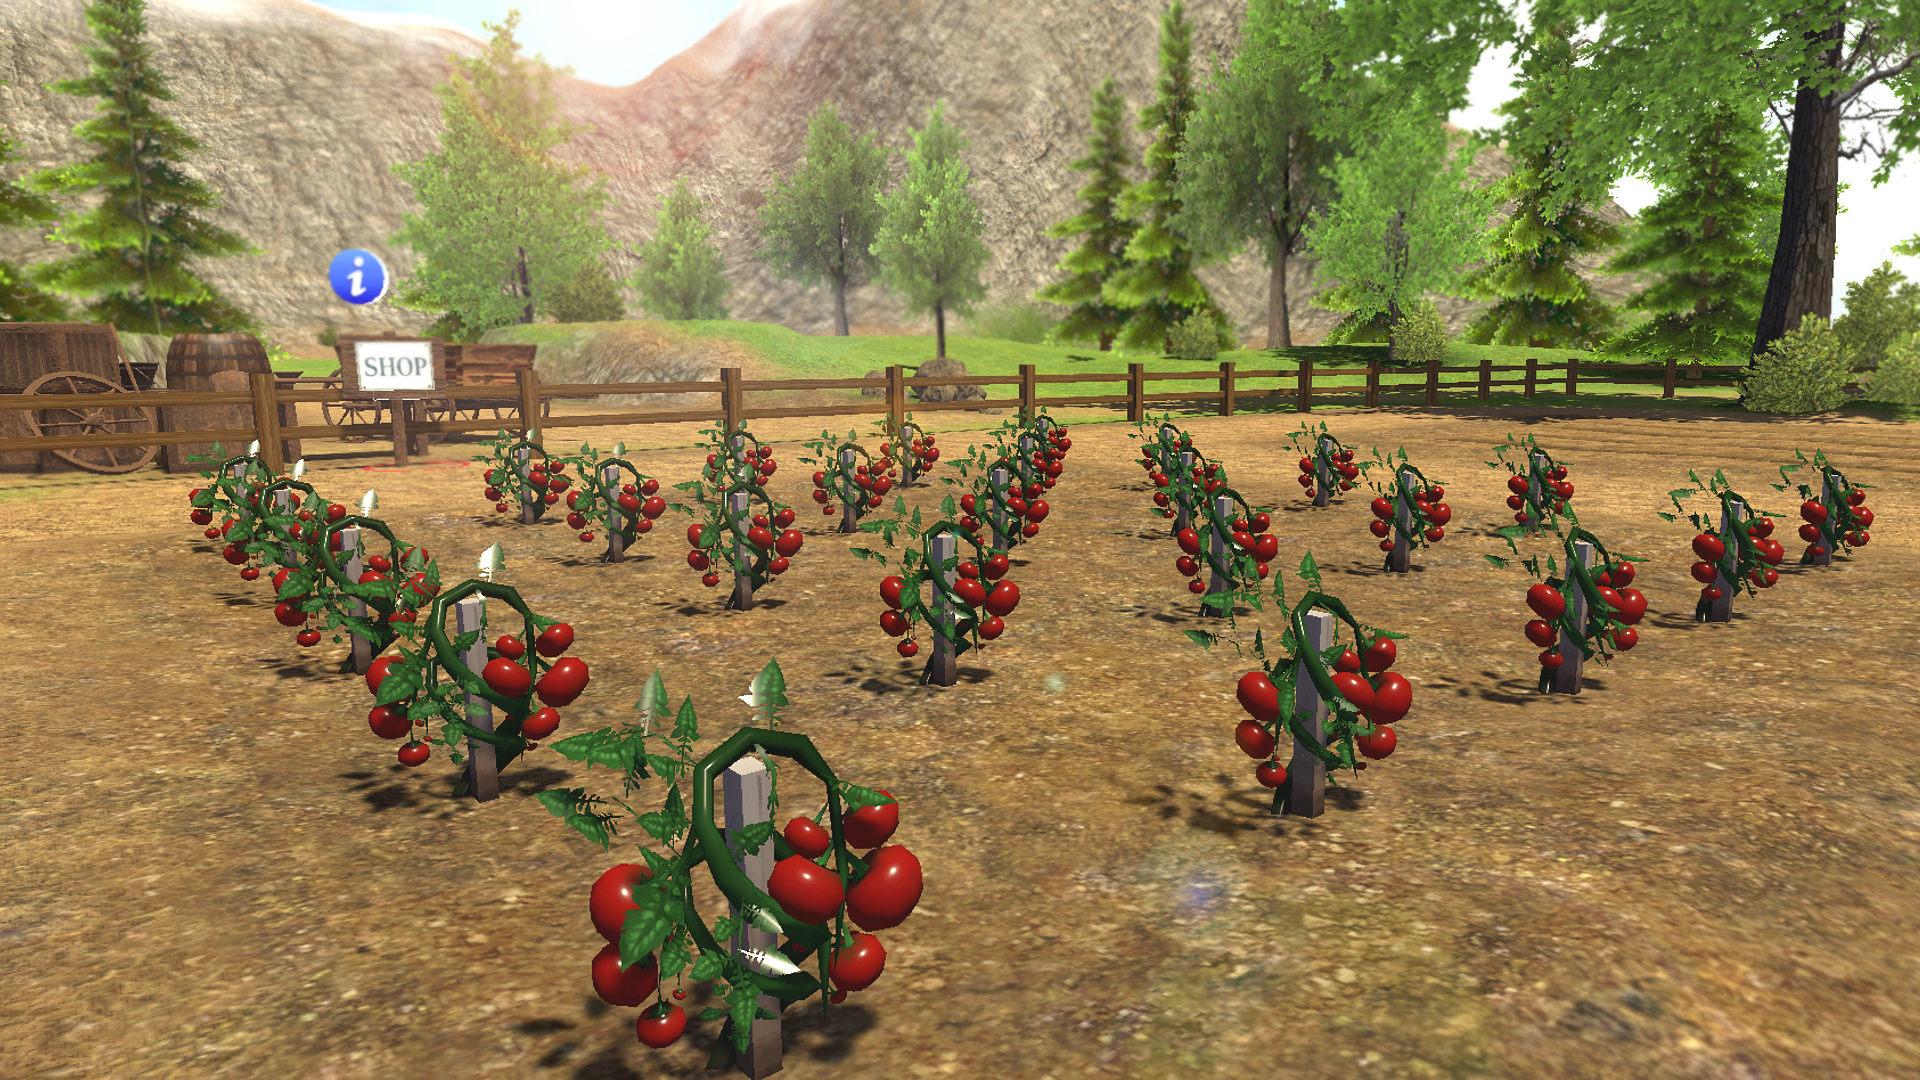 Harvest Simulator VR on Steam